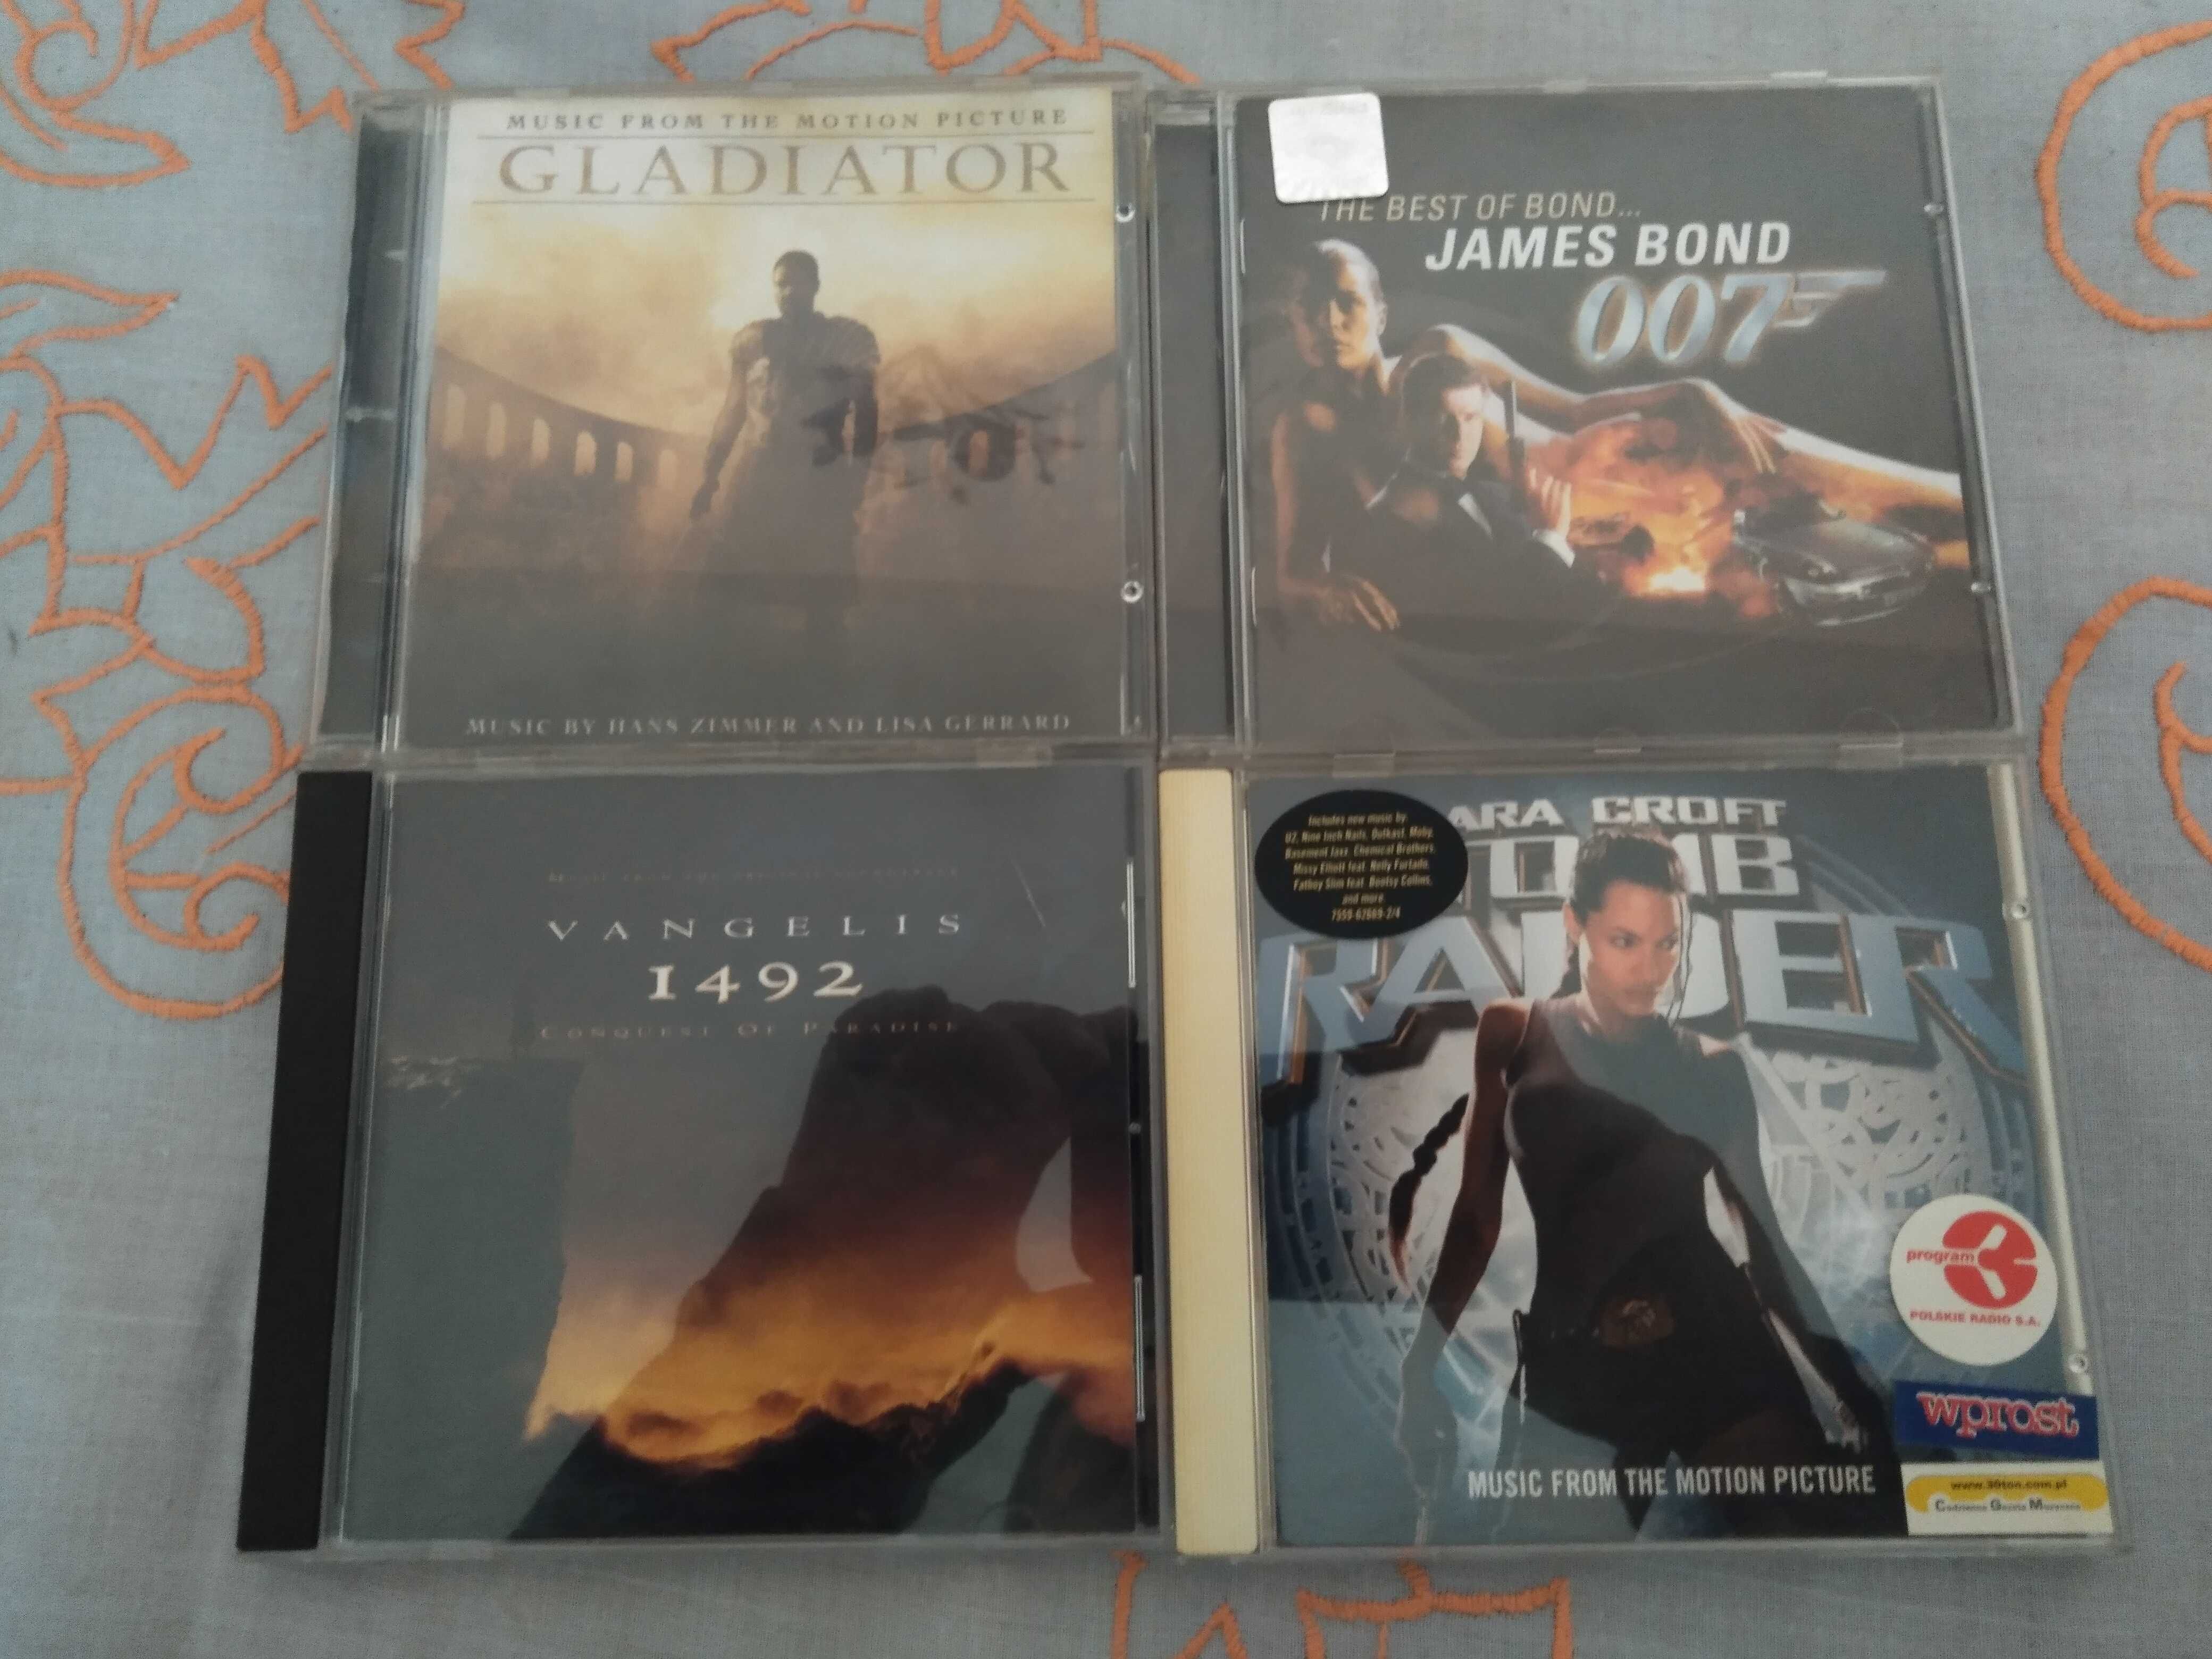 4 CD soundtrack Gladiator,1492,The best of Bond...